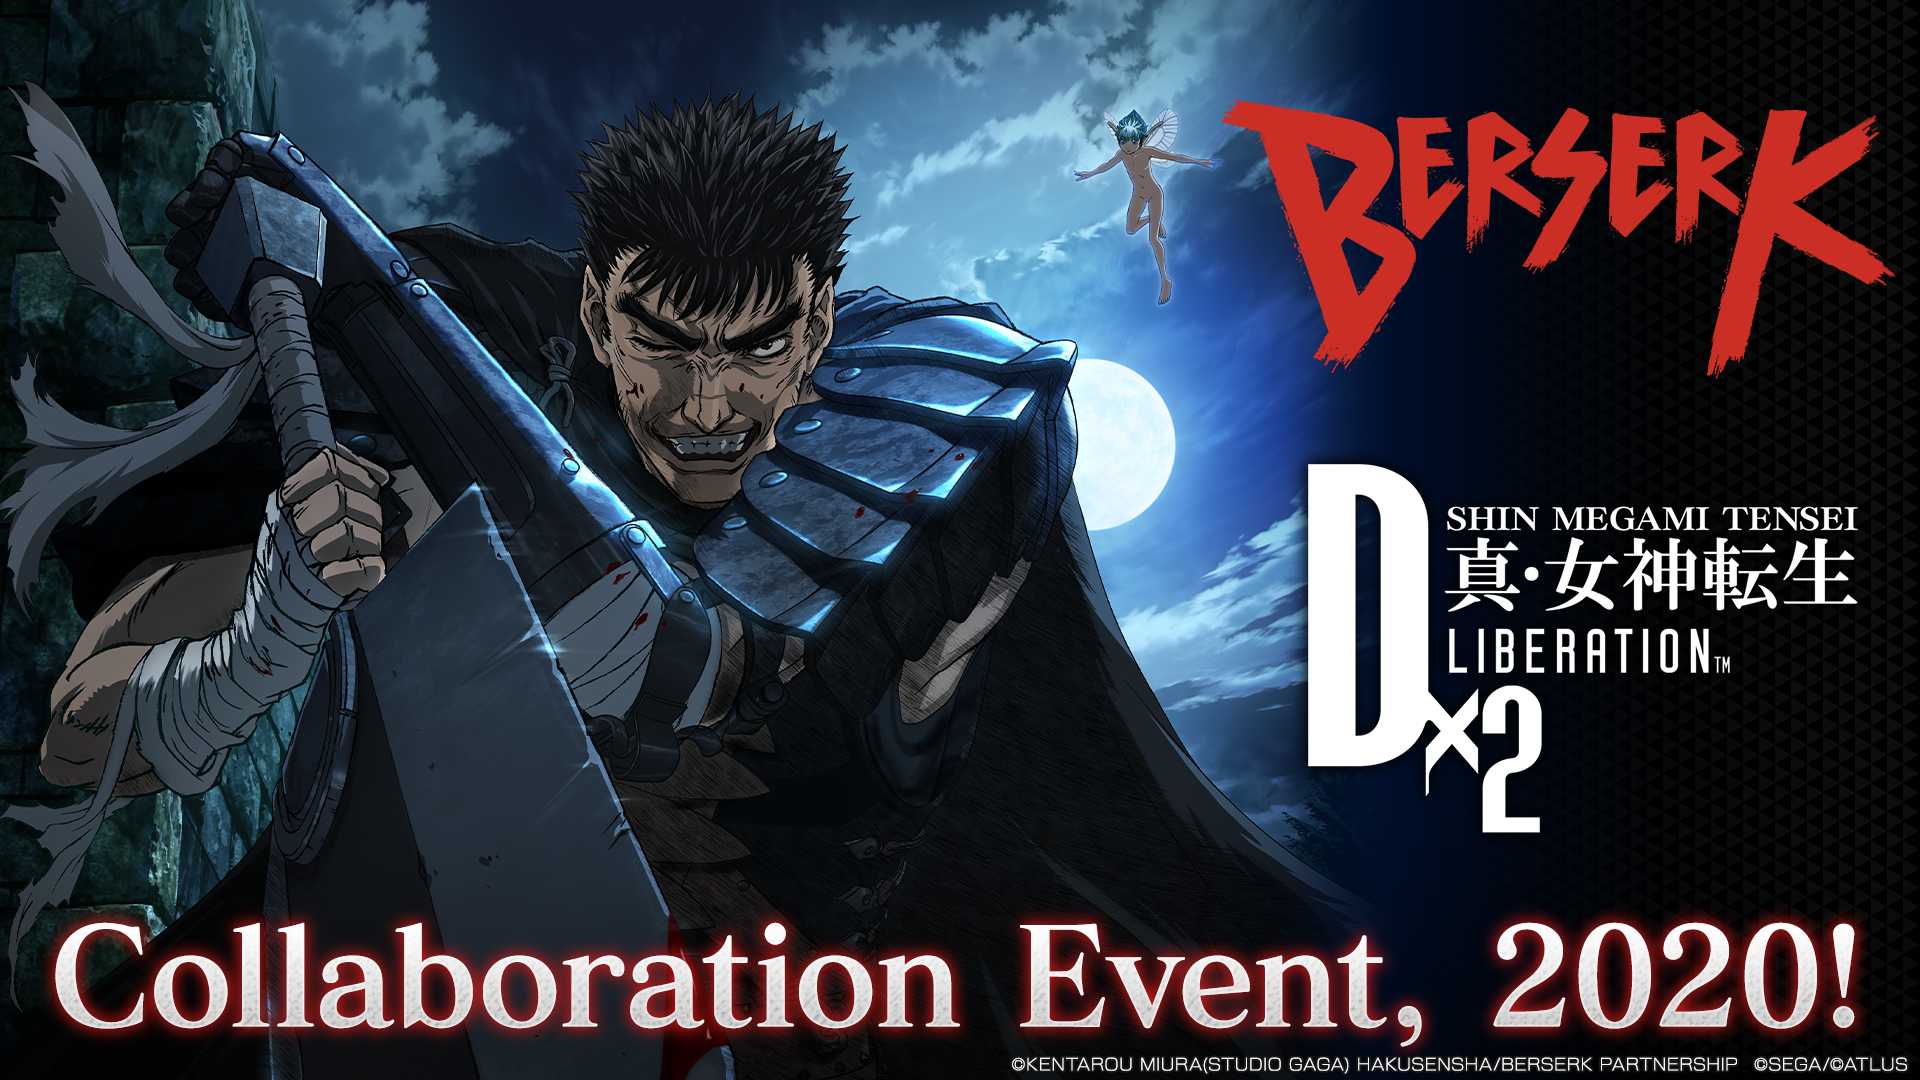 Shin Megami Tensei Liberation Dx2 y Berserk Anime lanzan evento